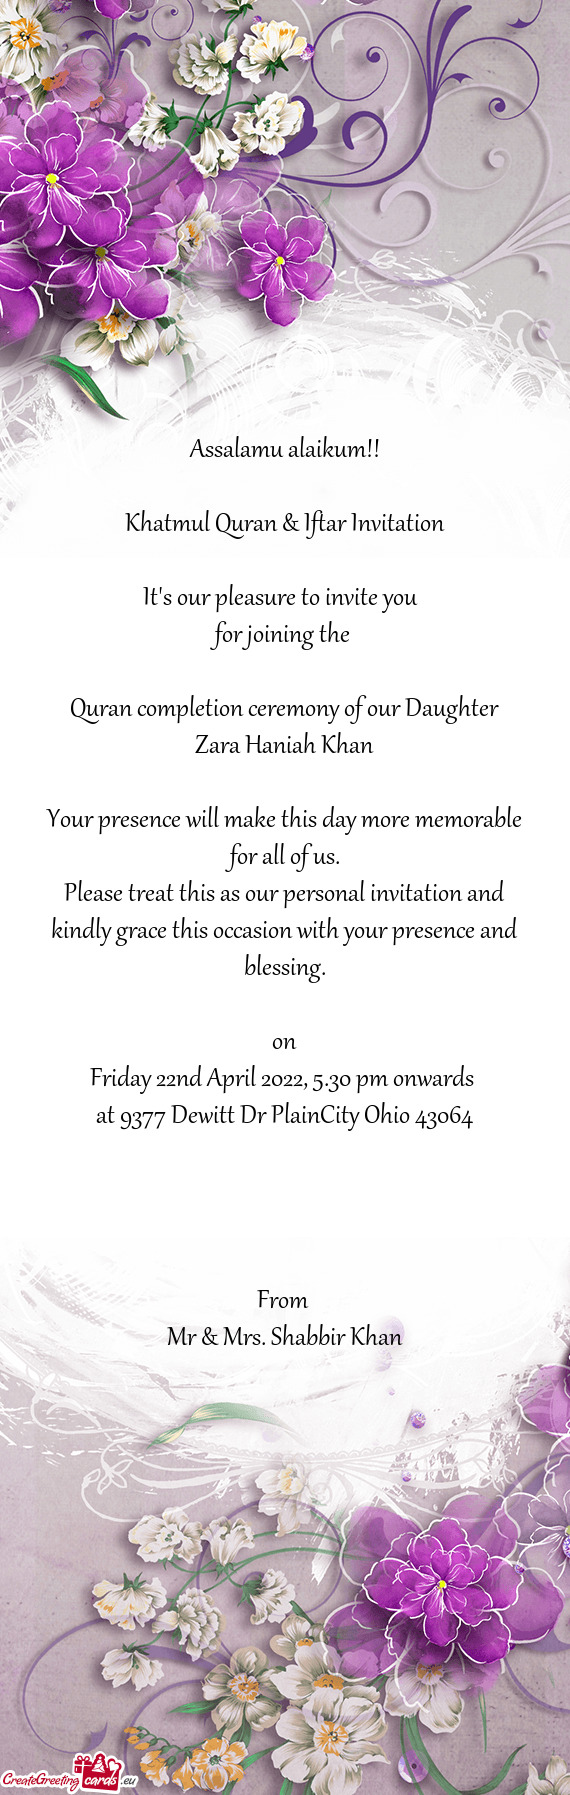 Khatmul Quran & Iftar Invitation